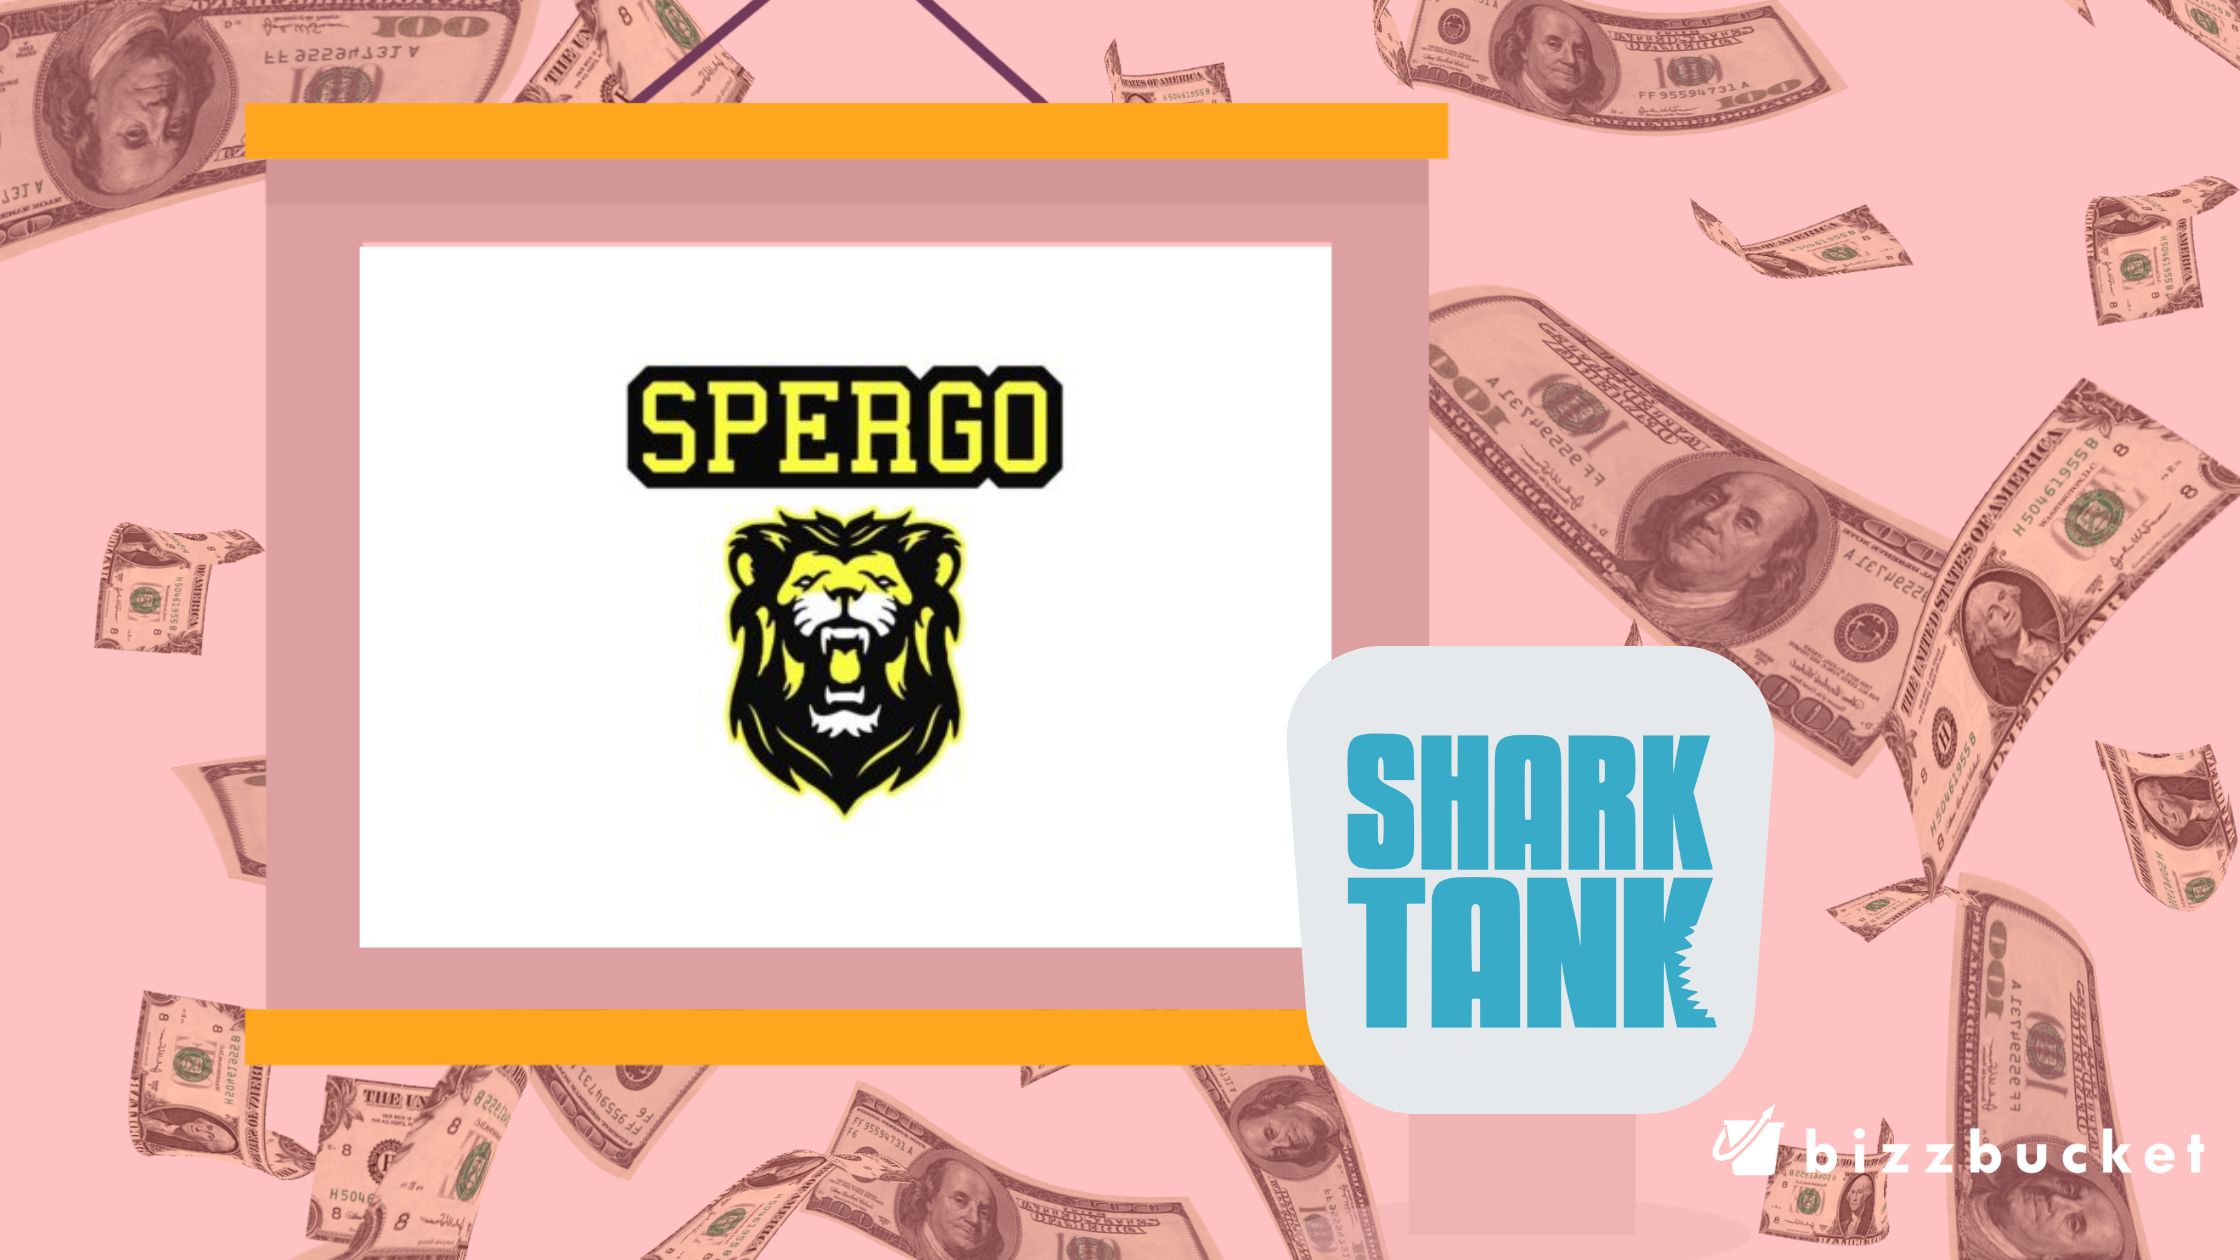 Spergo shark tank update